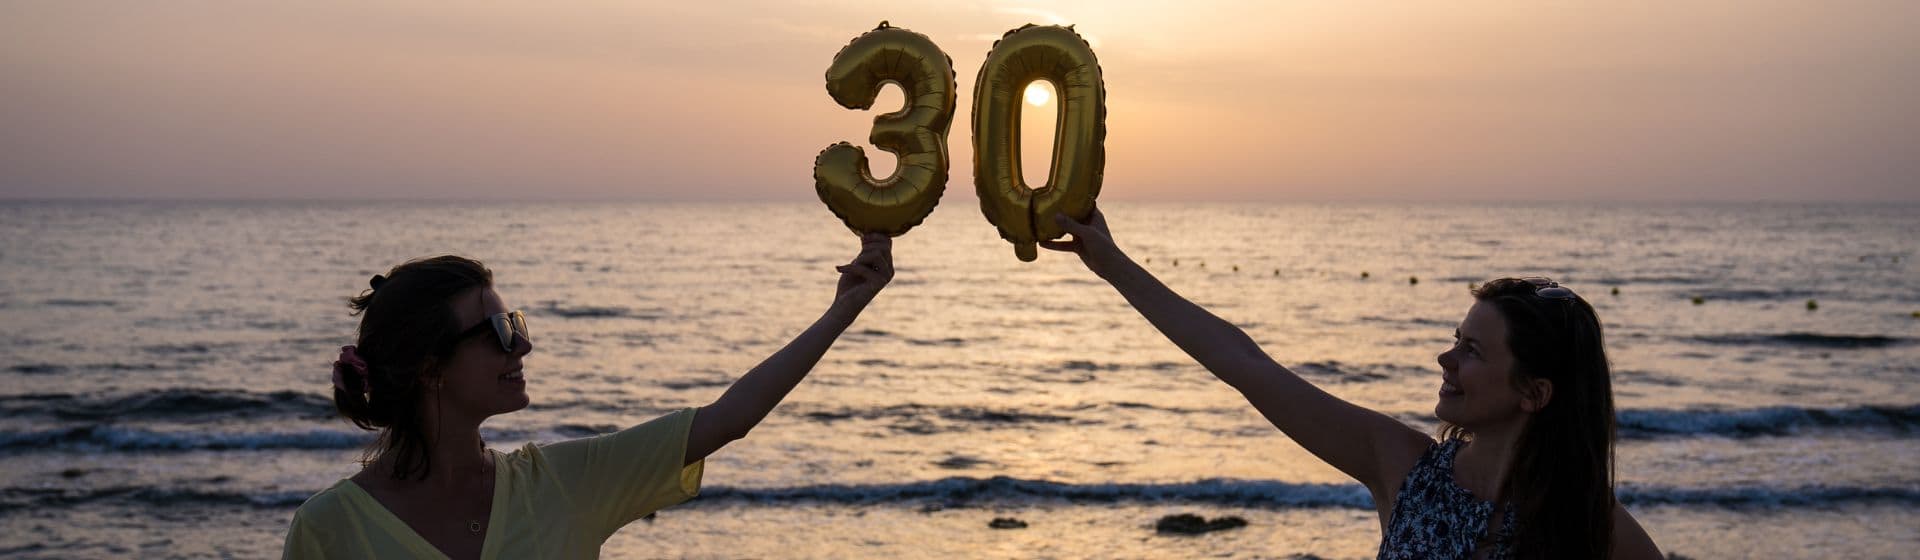 Zwei Frauen feiern 30 Geburtstag am Strand